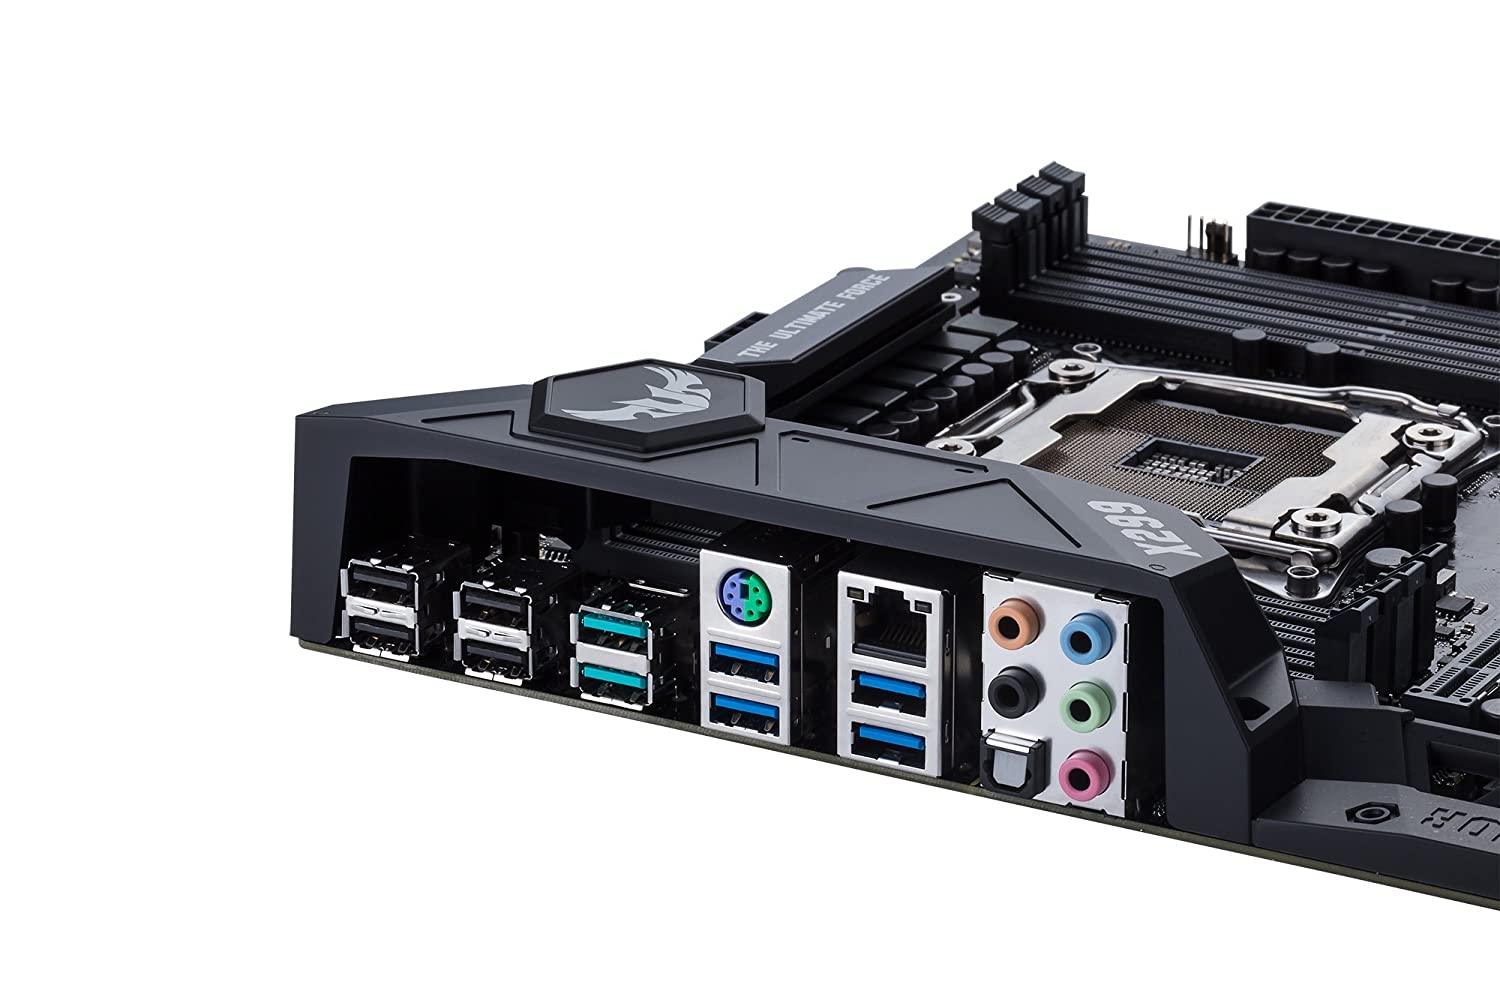 Asus Prime X299-A LGA 2066 Motherboard-Mother Boards-dealsplant